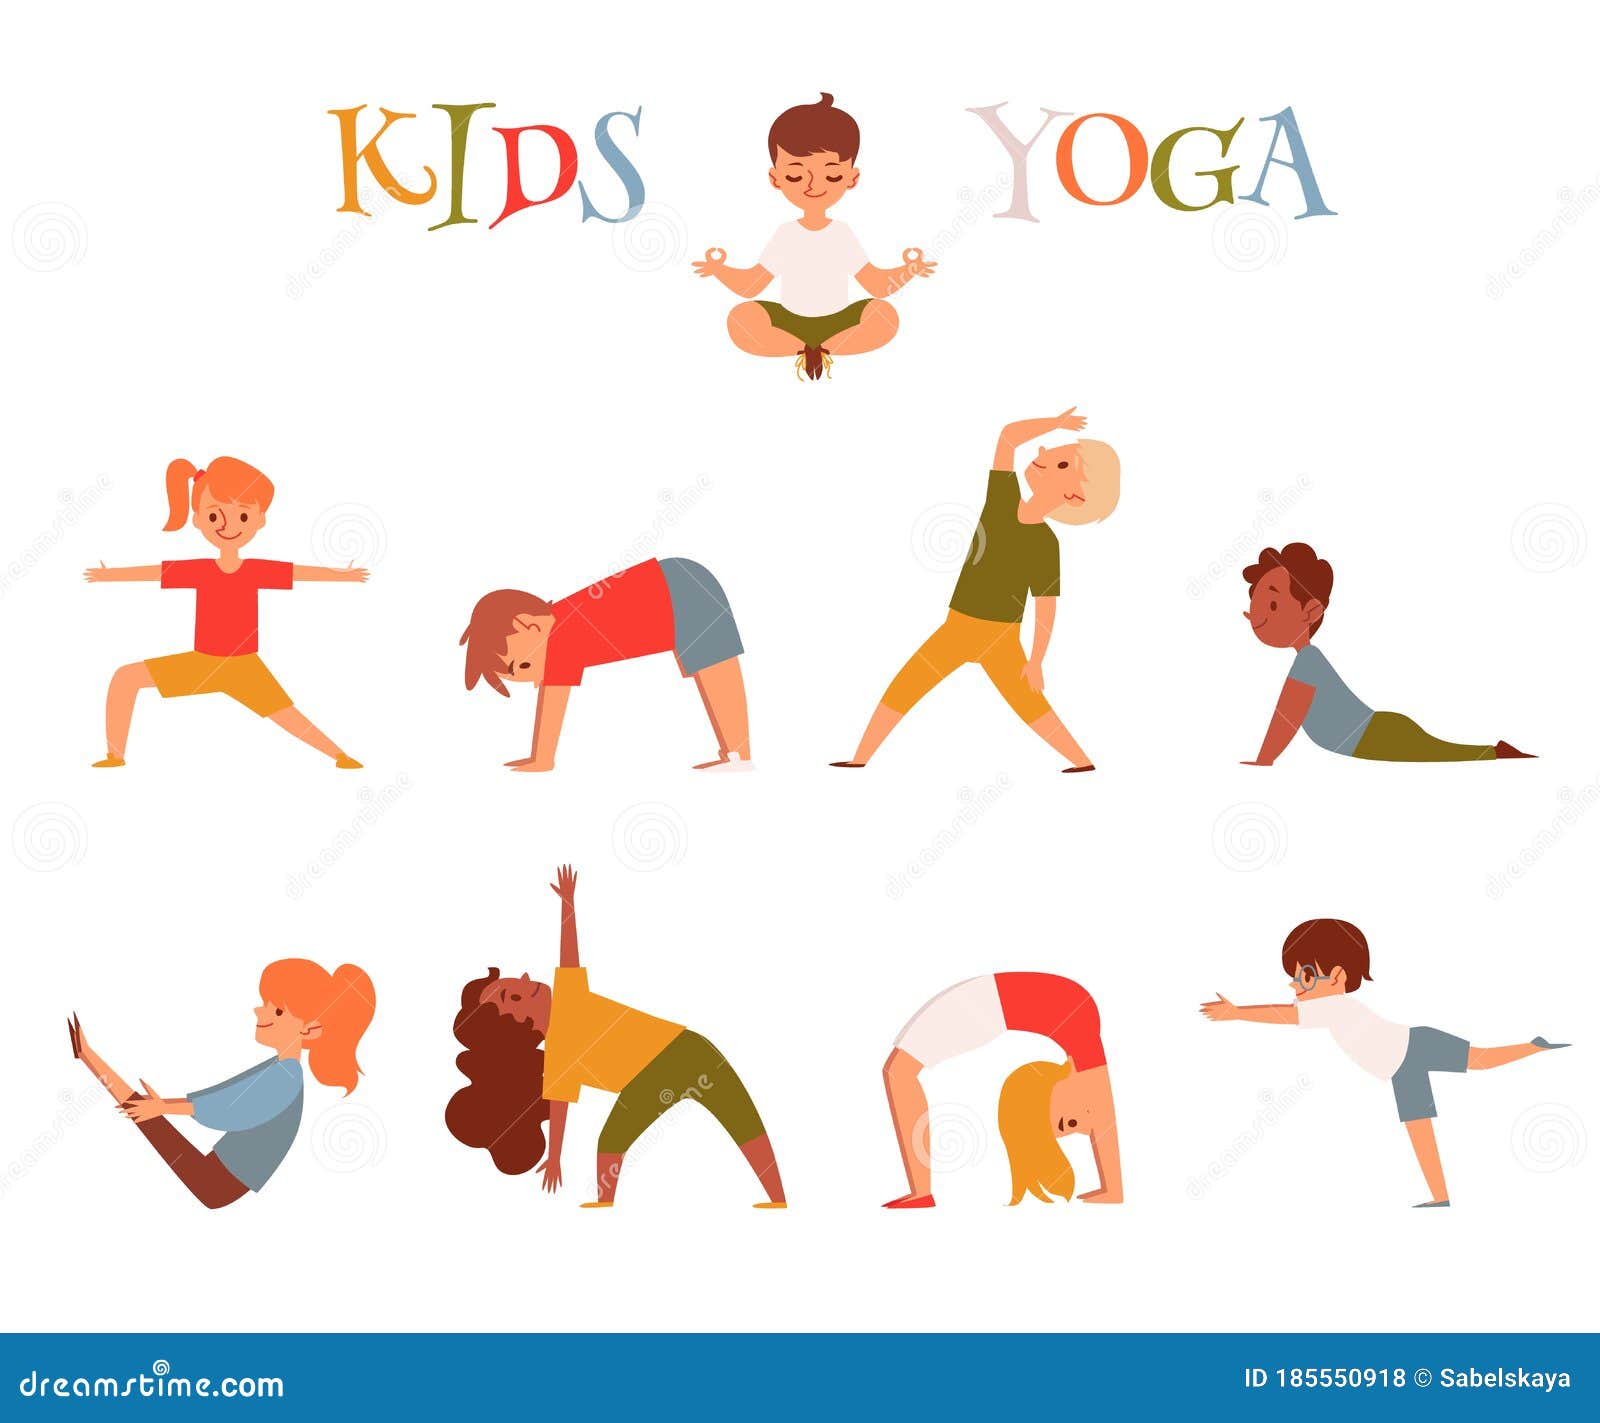 FREE! - Stress Reducing Yoga Poses | Free Printable Yoga Posters